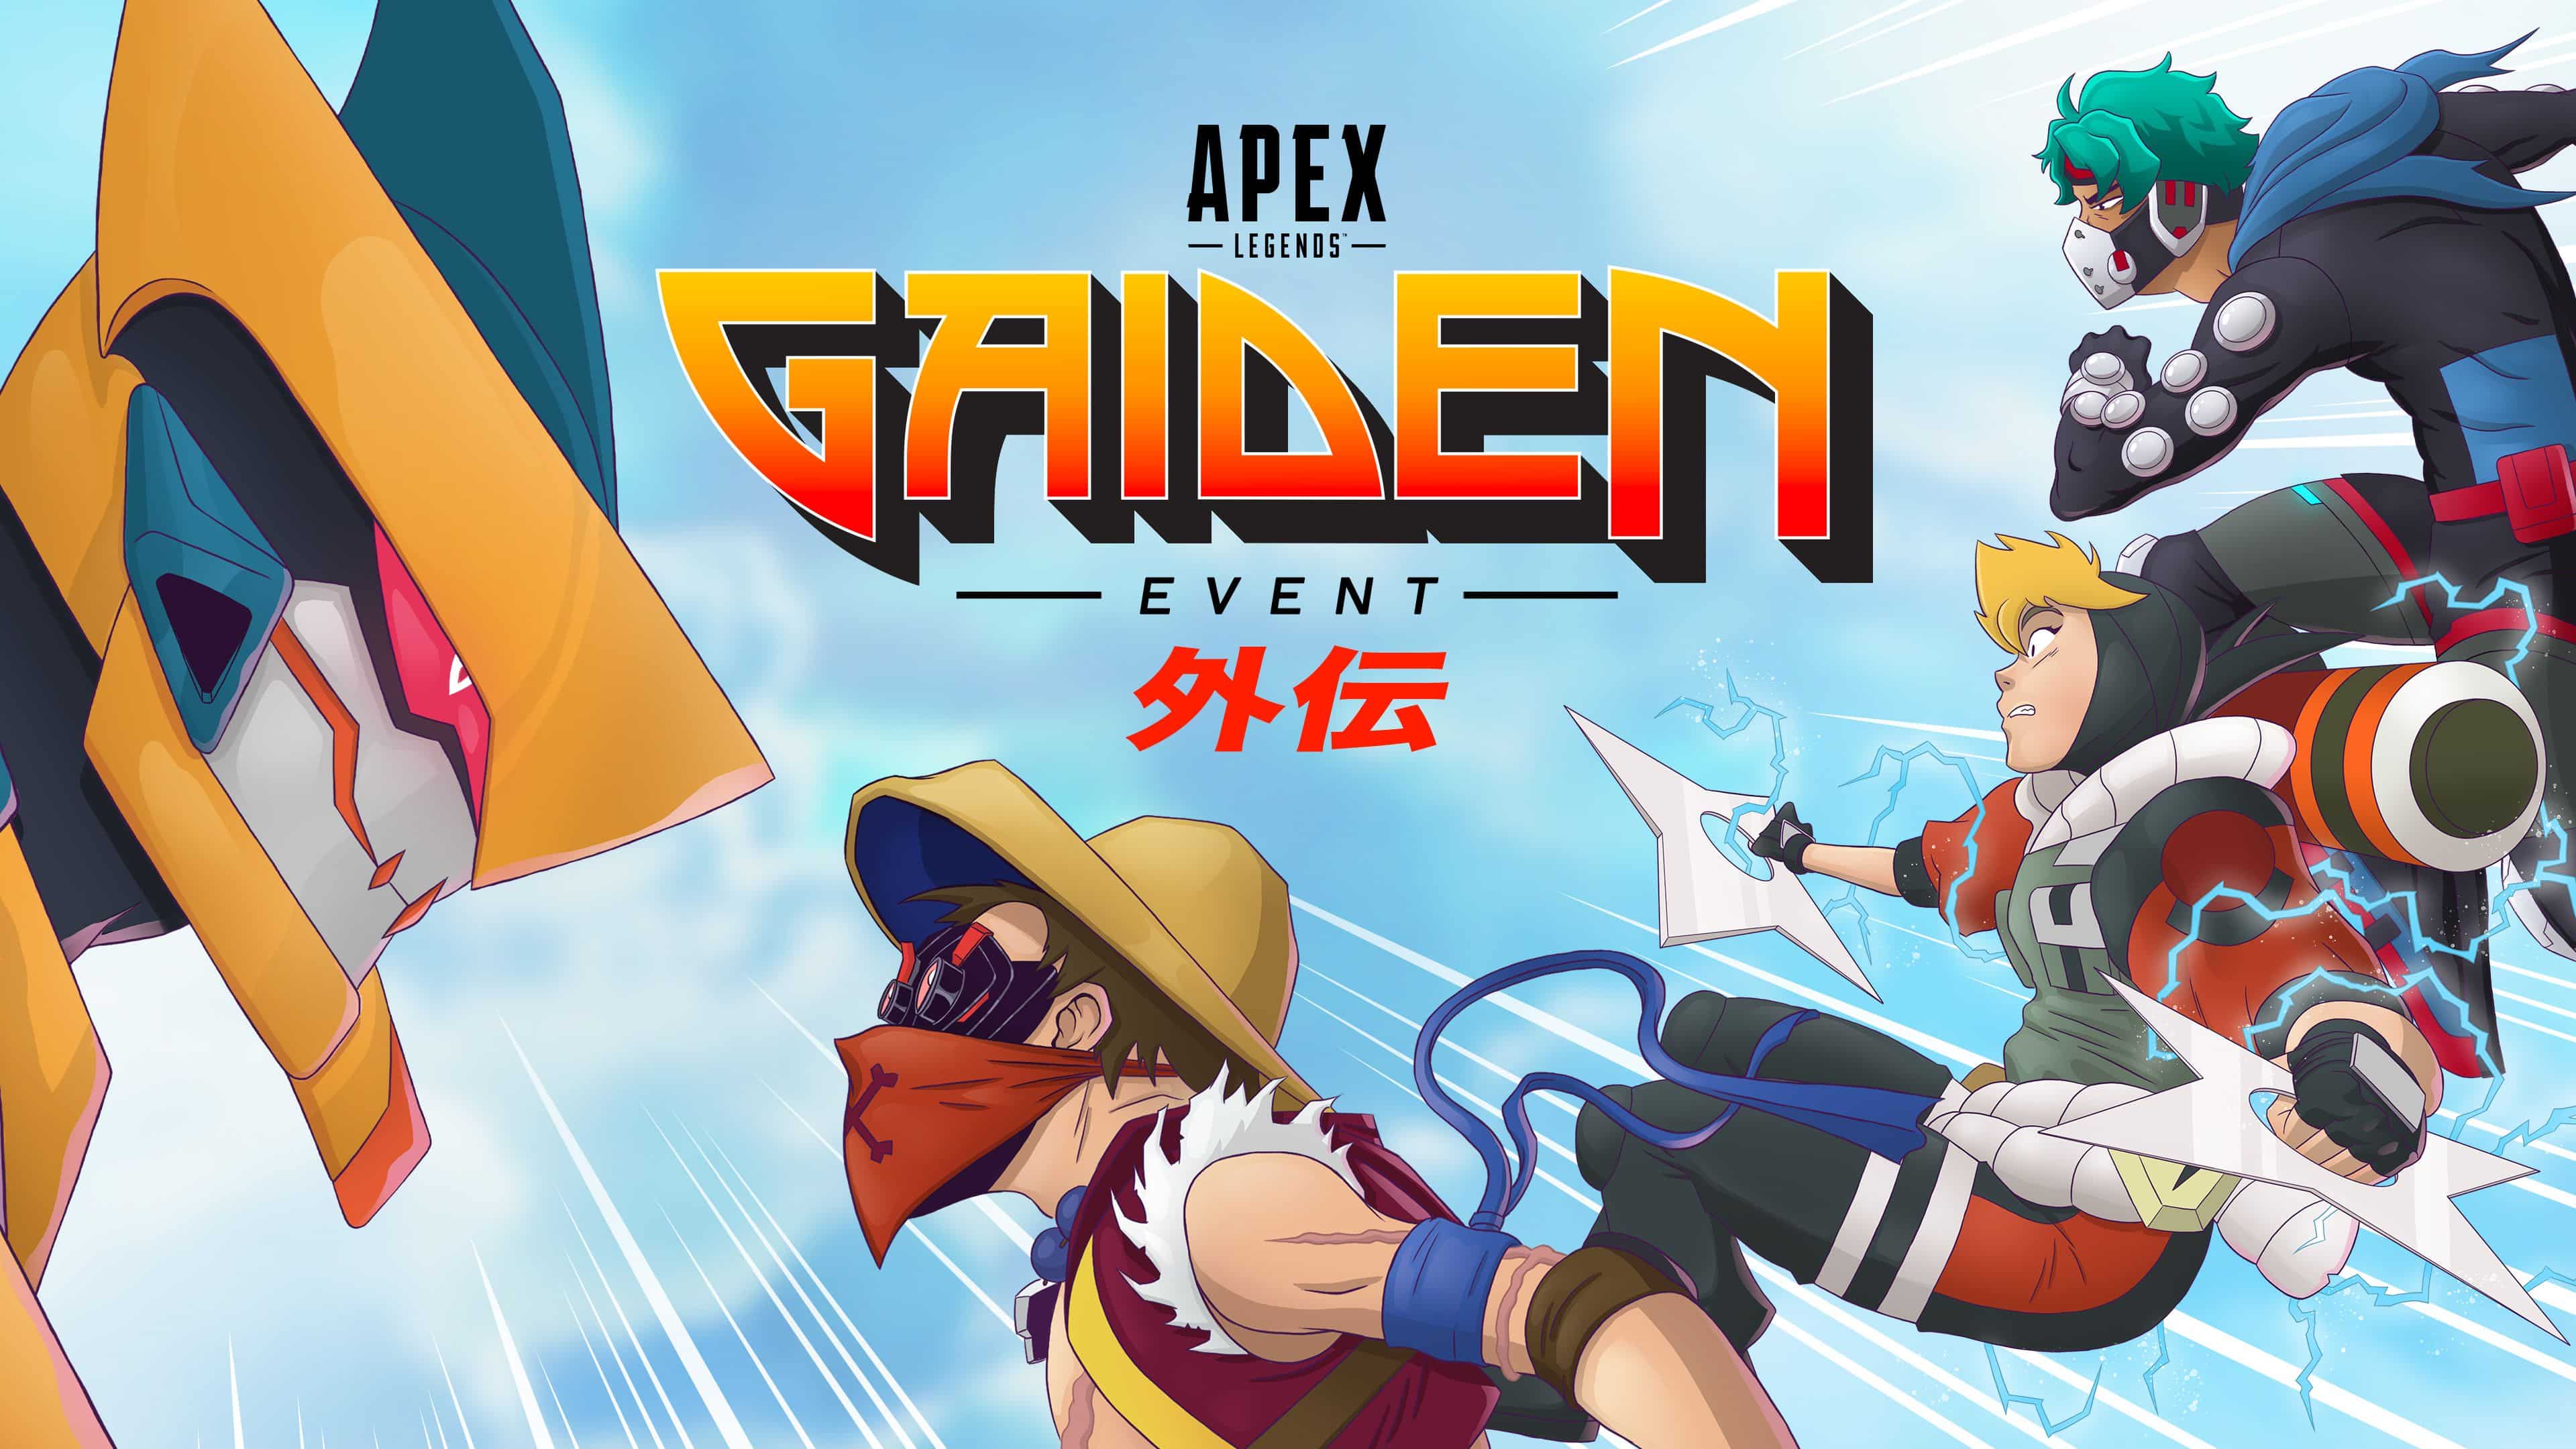 Apex Legends Next Event "Gaiden" Launching July 19, Armed & Dangerous